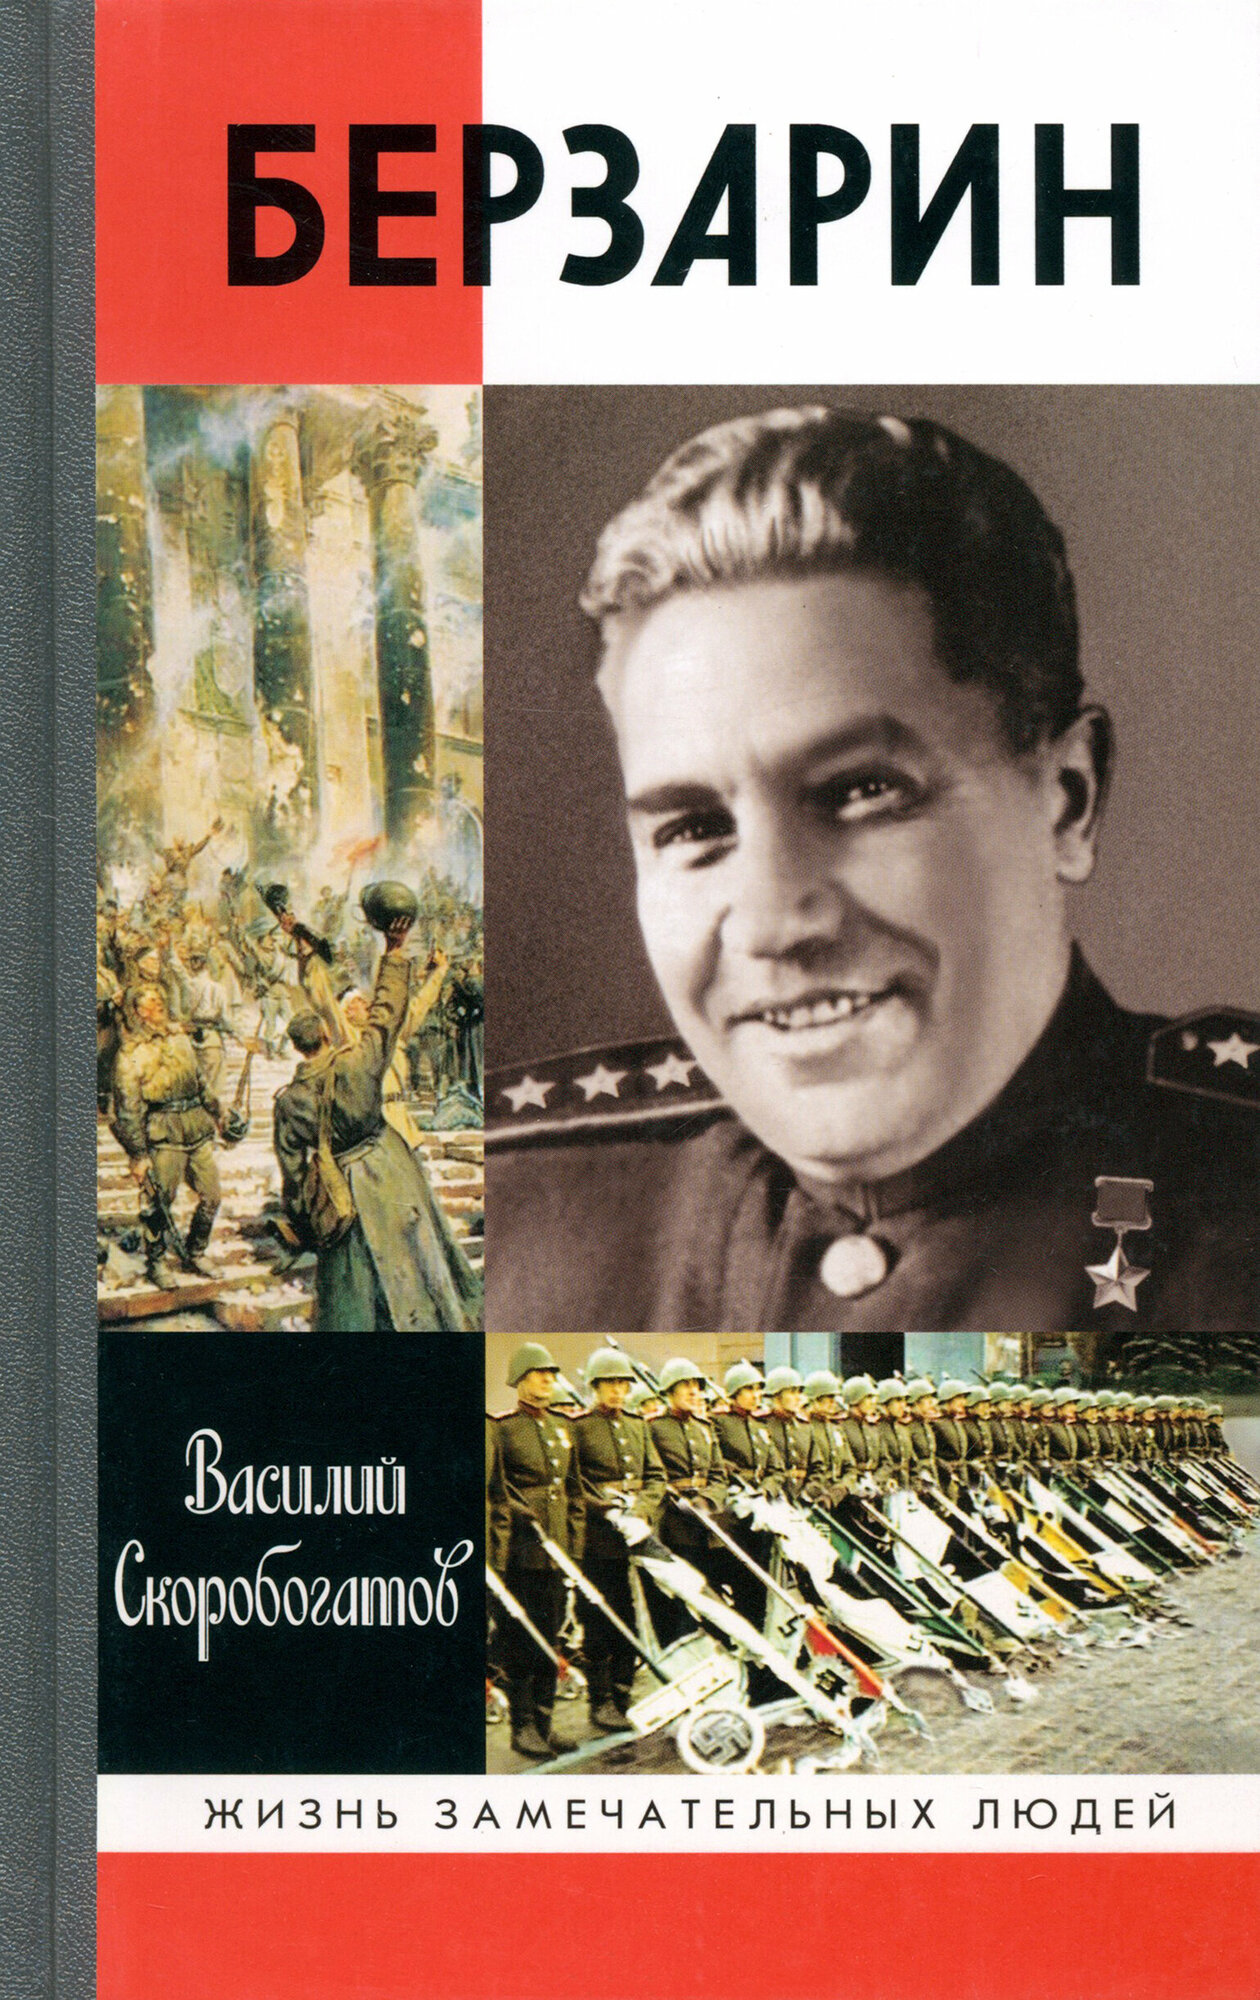 Генерал Берзарин (Скоробогатов Василий Ефимович) - фото №4